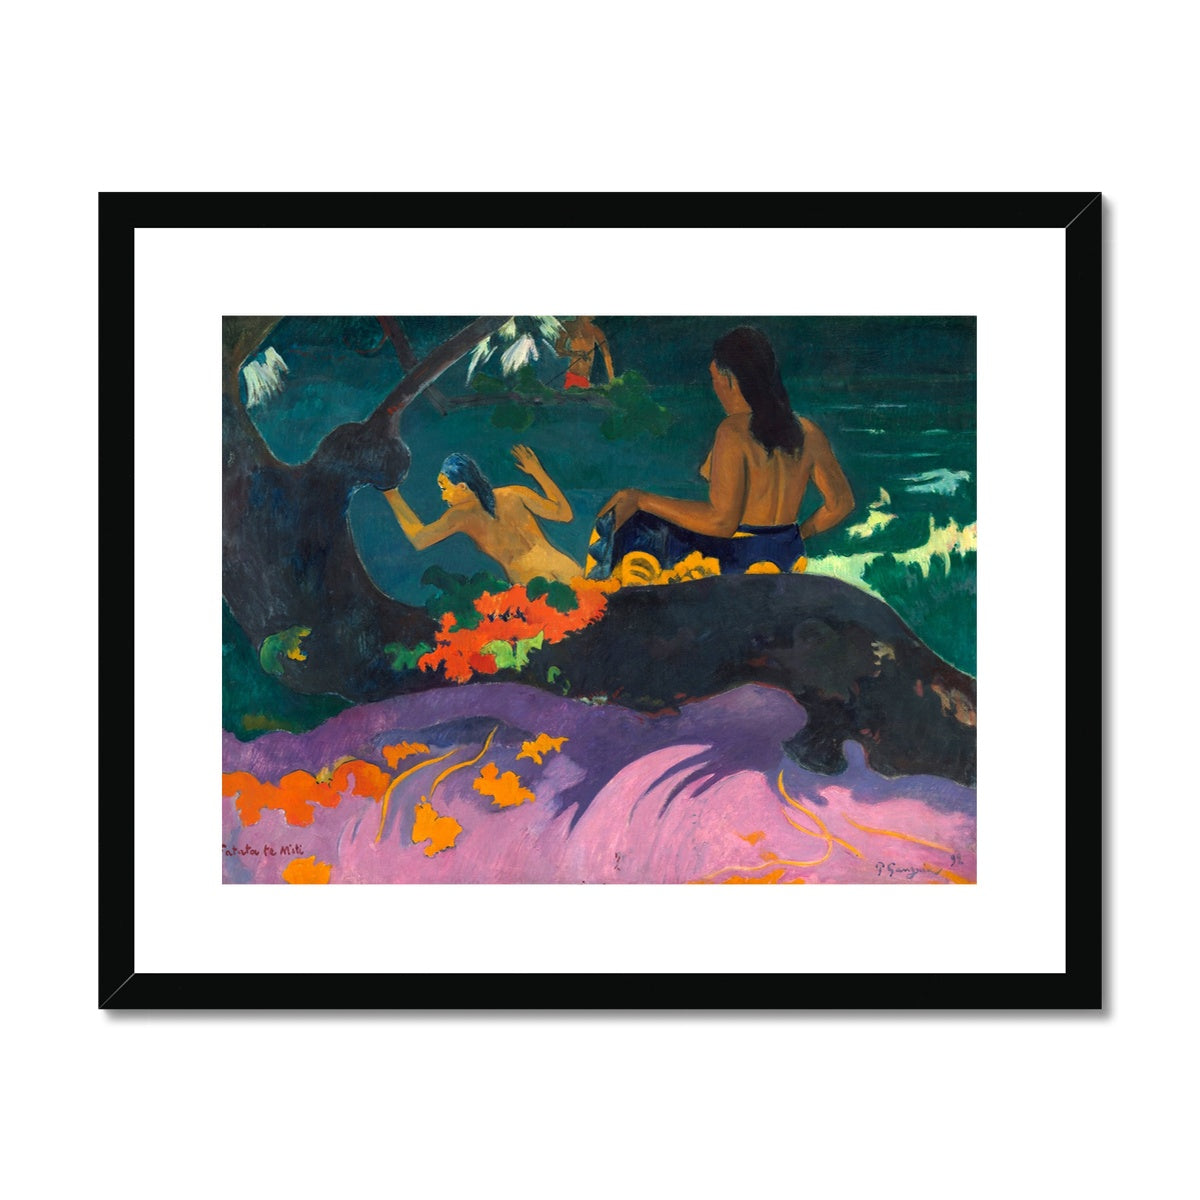 Paul Gauguin Framed Open Edition Art Print. 'Fatata te Miti', by the sea. Art Gallery Historic Art